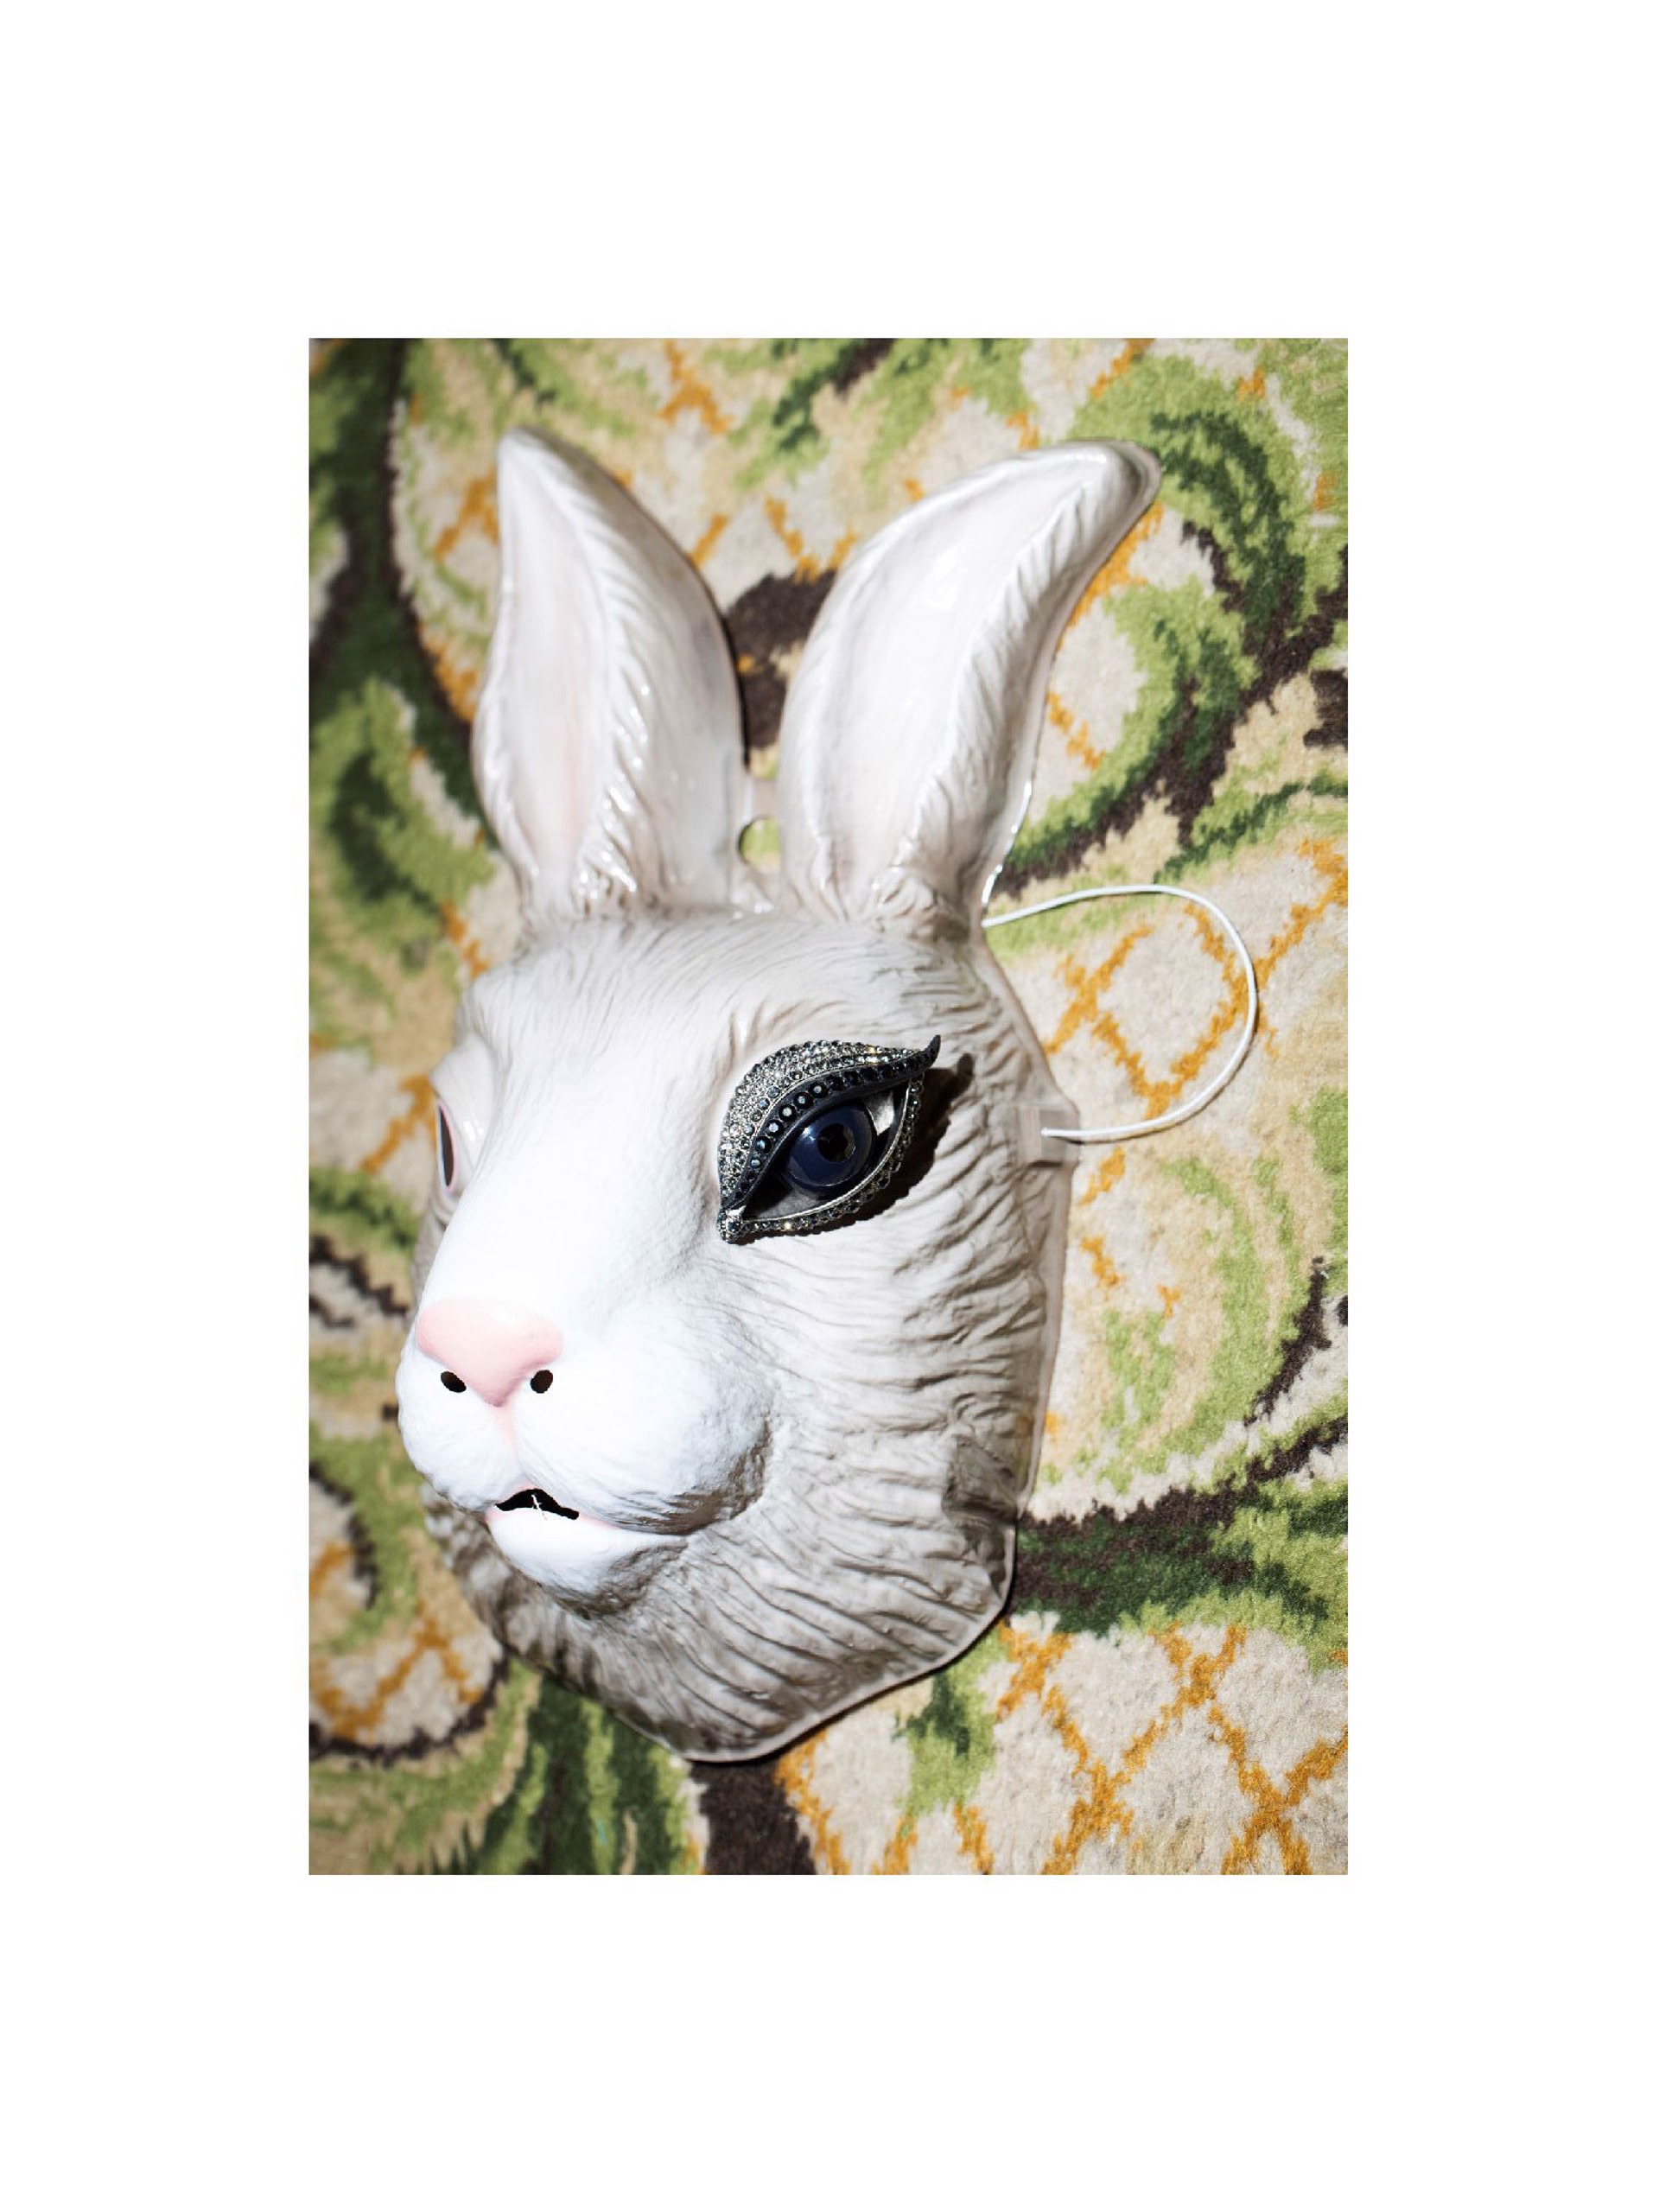 Rabbit by Thom Jackson